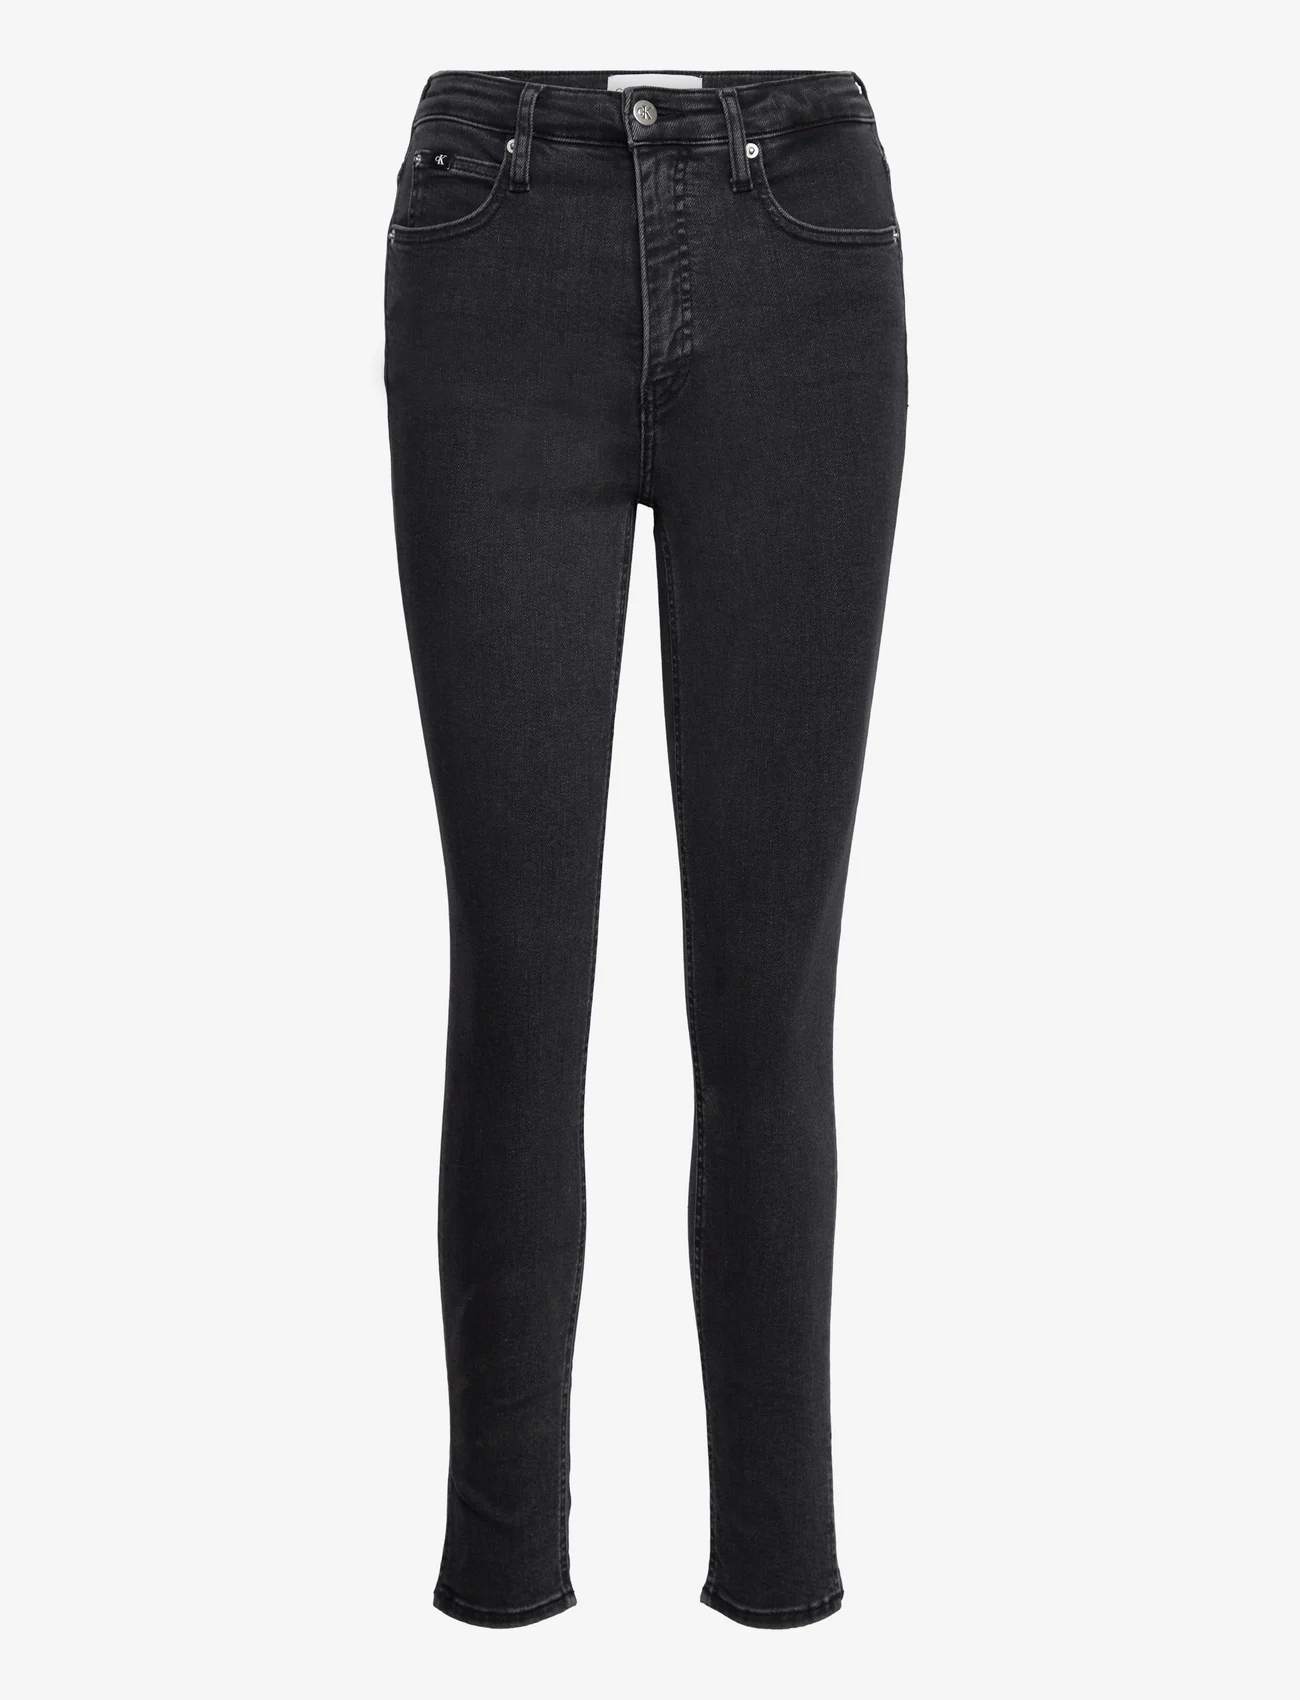 Calvin Klein Jeans - HIGH RISE SKINNY - skinny jeans - denim black - 0